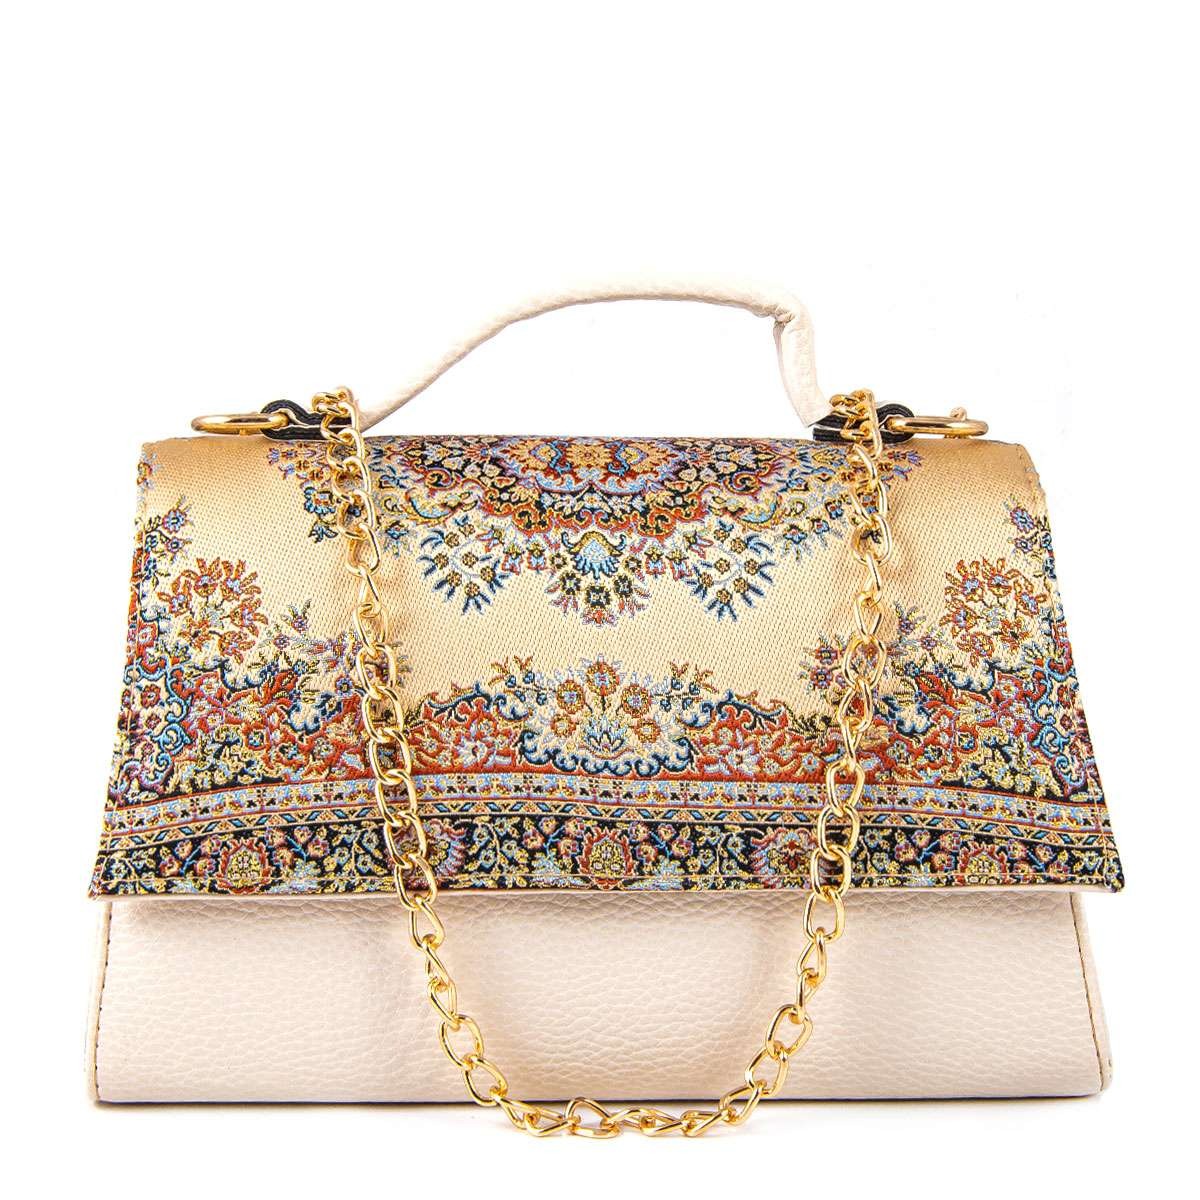 Turkish Handcrafted Tapestry Bag - Exquisite Artisanal Elegance, Vintage fancy style